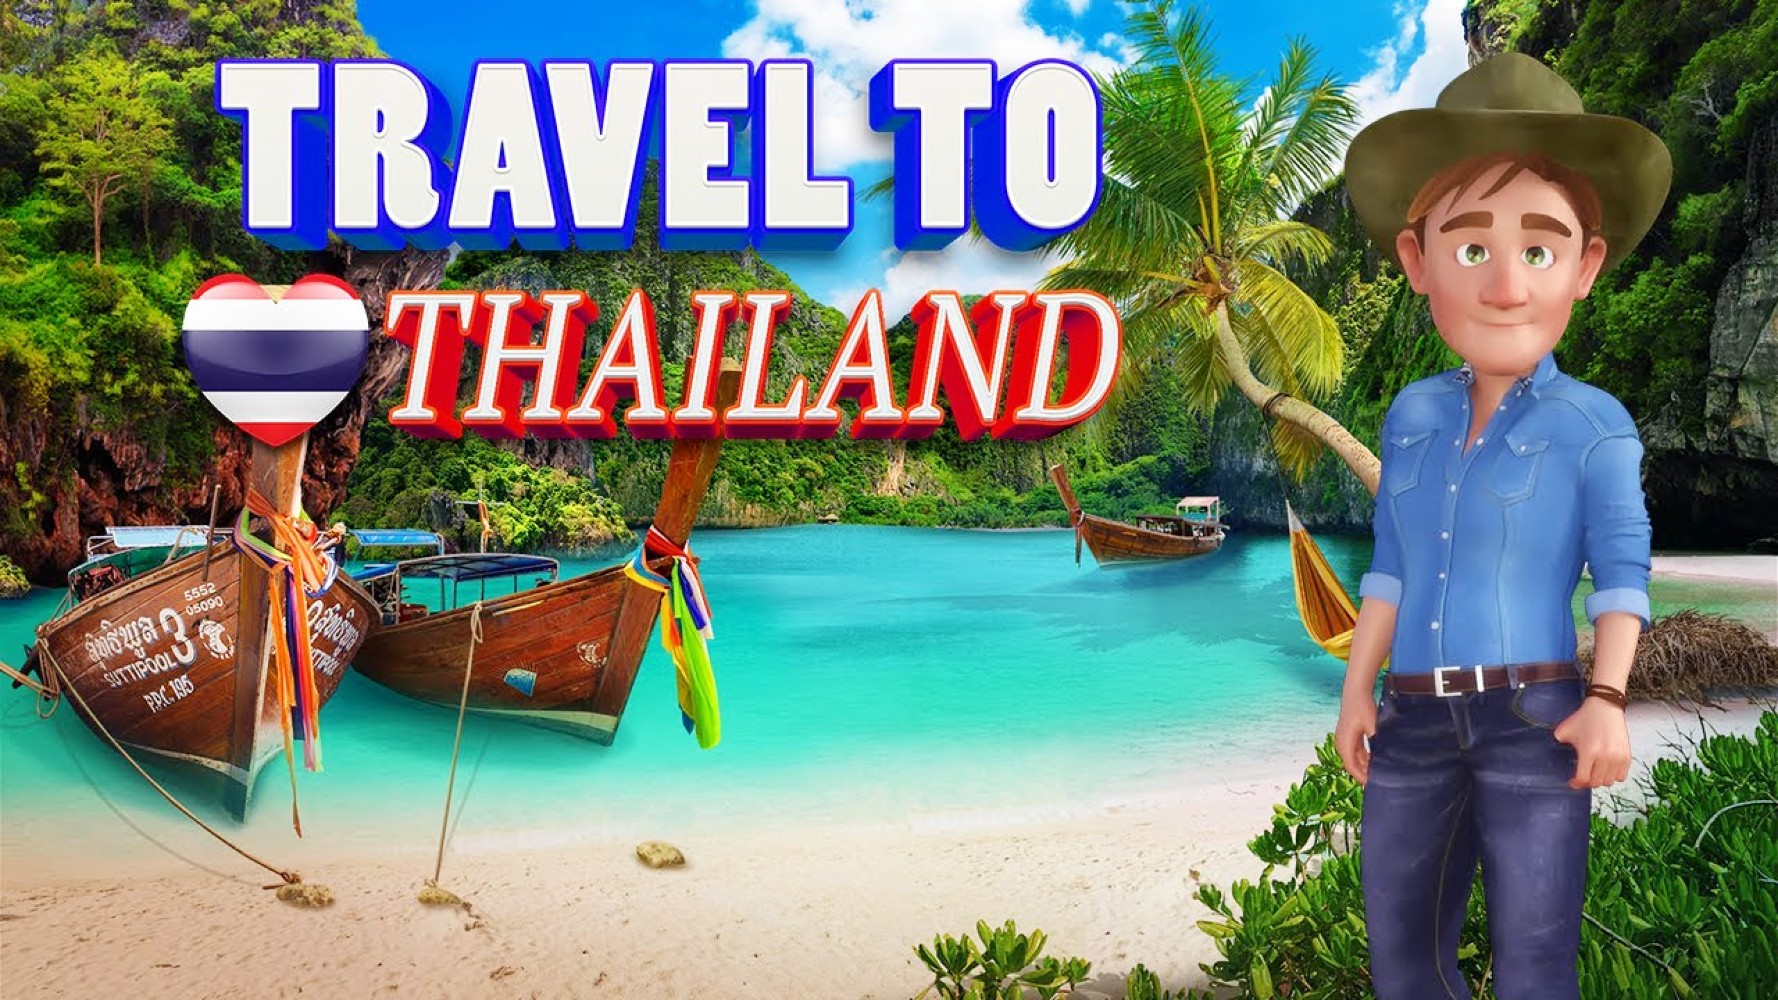 <img src="Travel.jpg" alt="Travel To Thailand Free Online Video Games"/> 